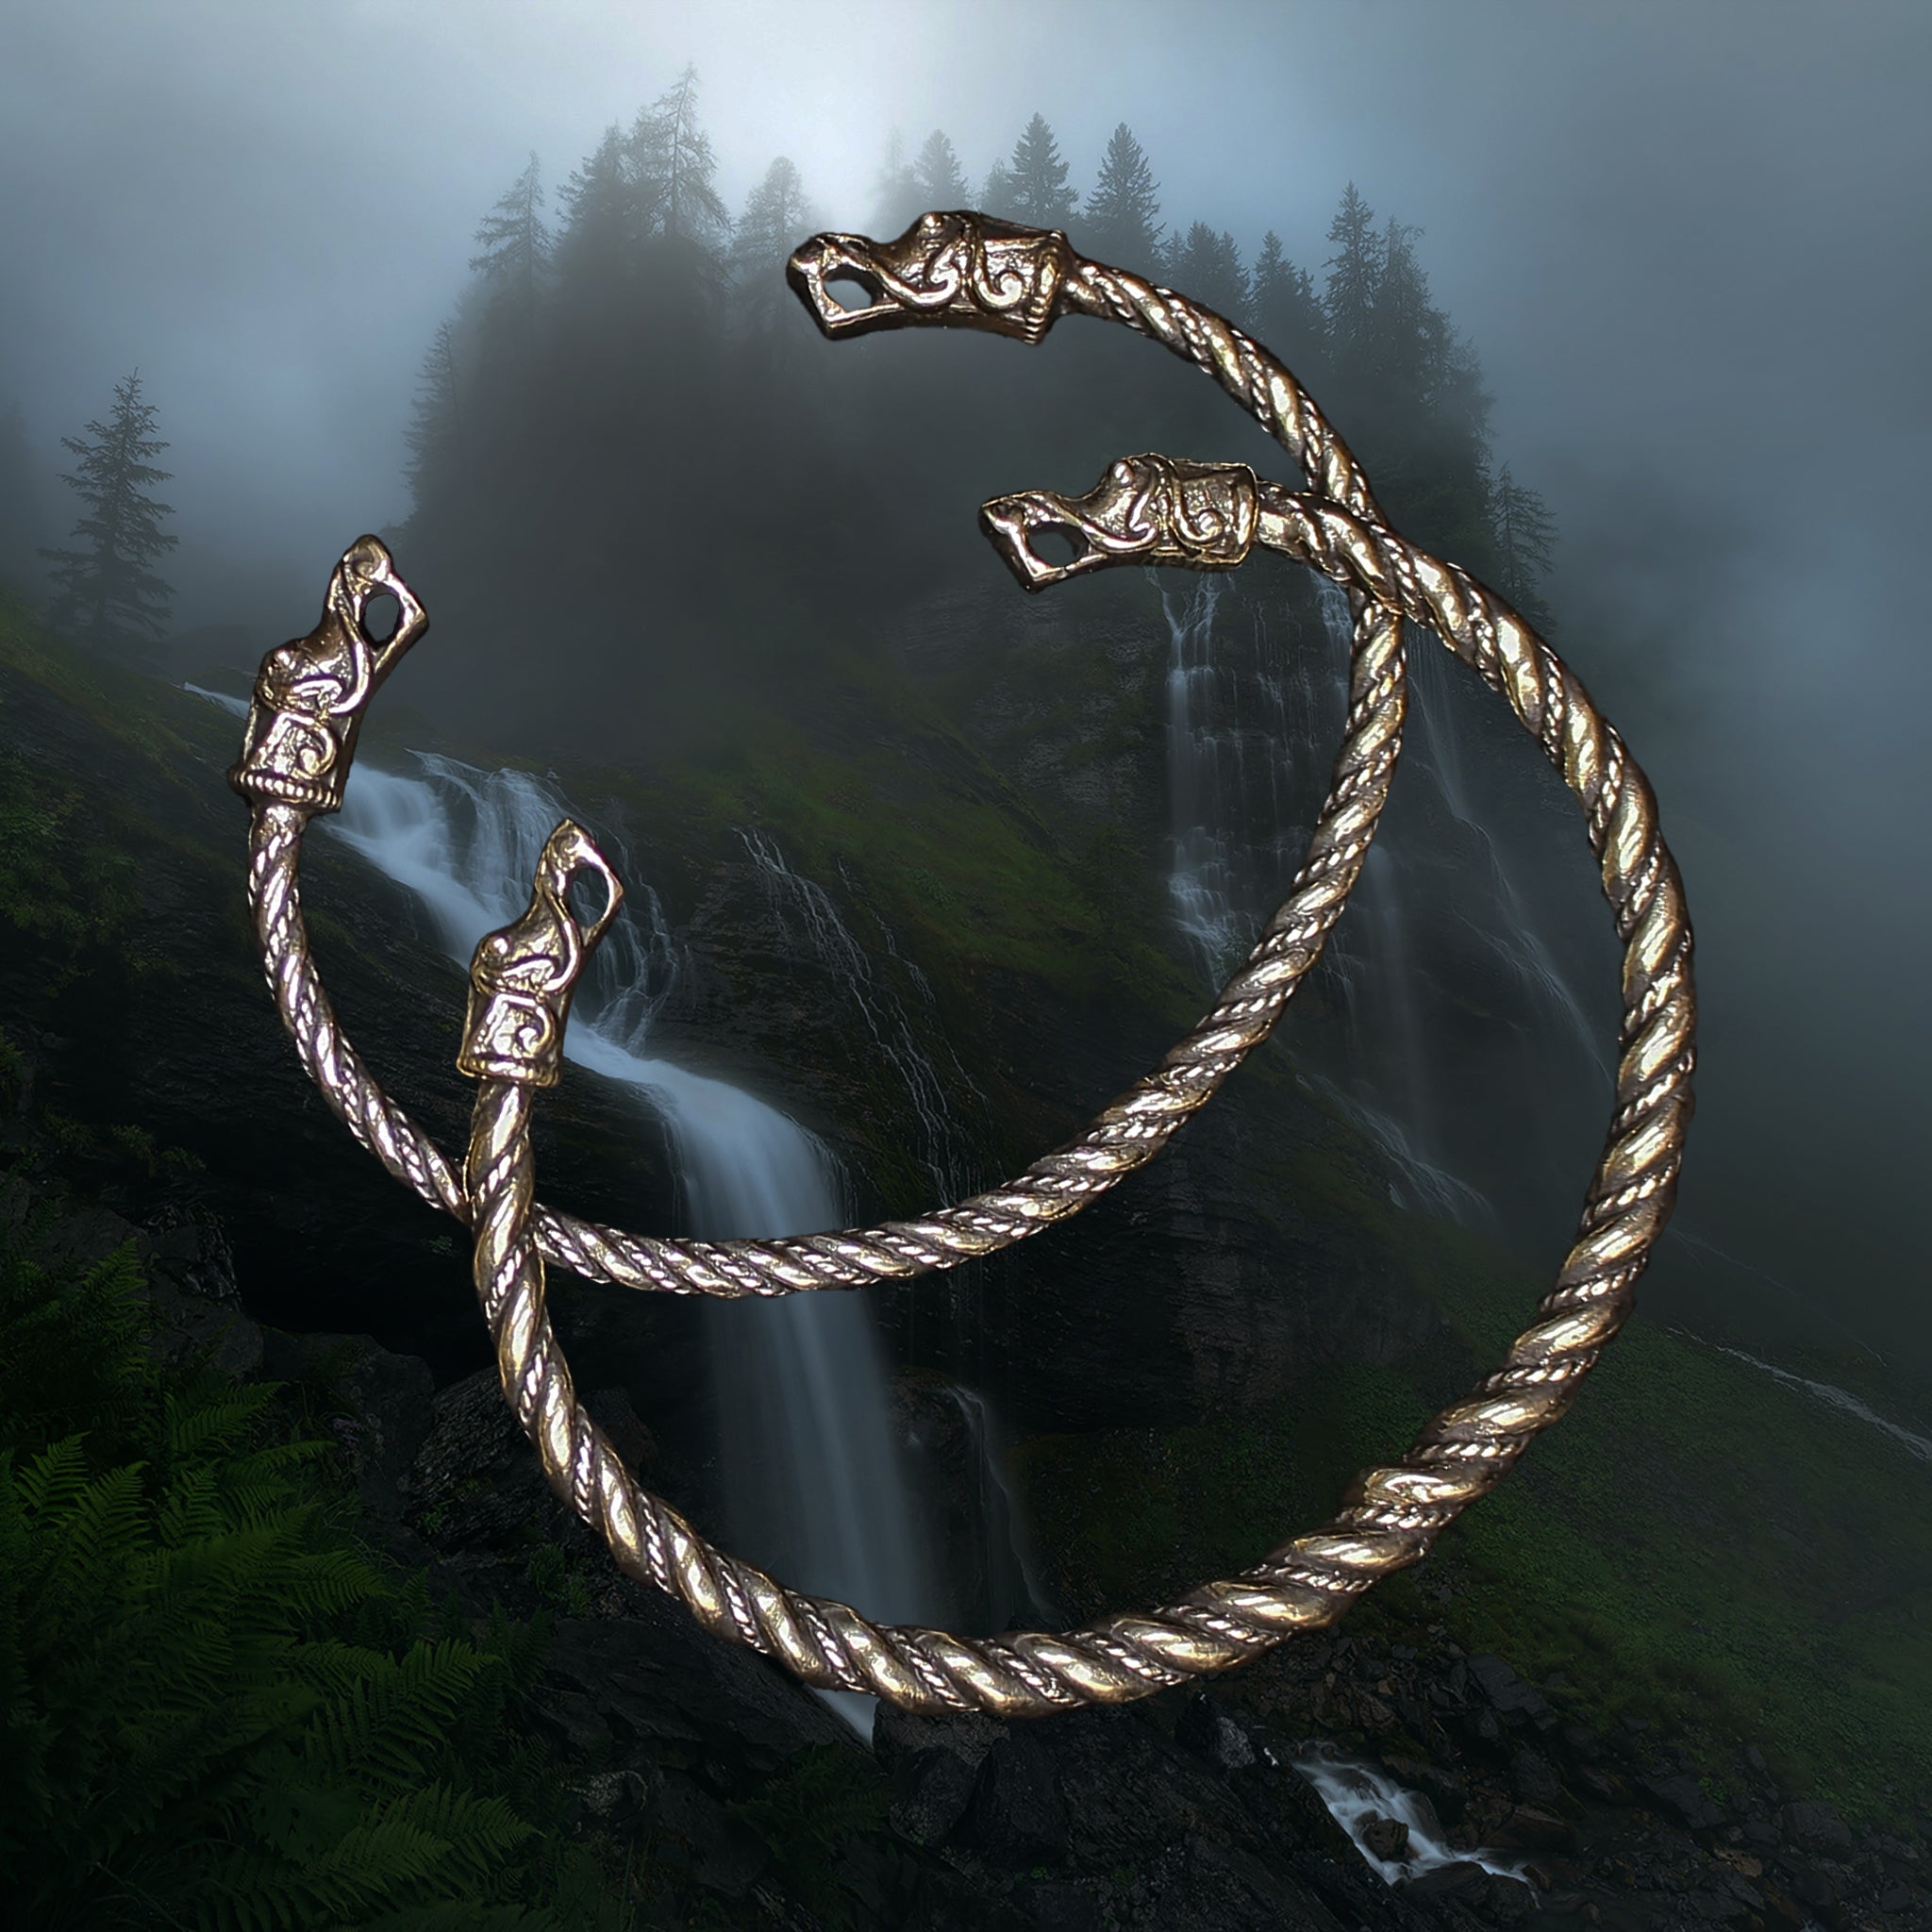 Twisted Bronze Bracelet With Gotlandic Dragon Heads - Misty Wood Background